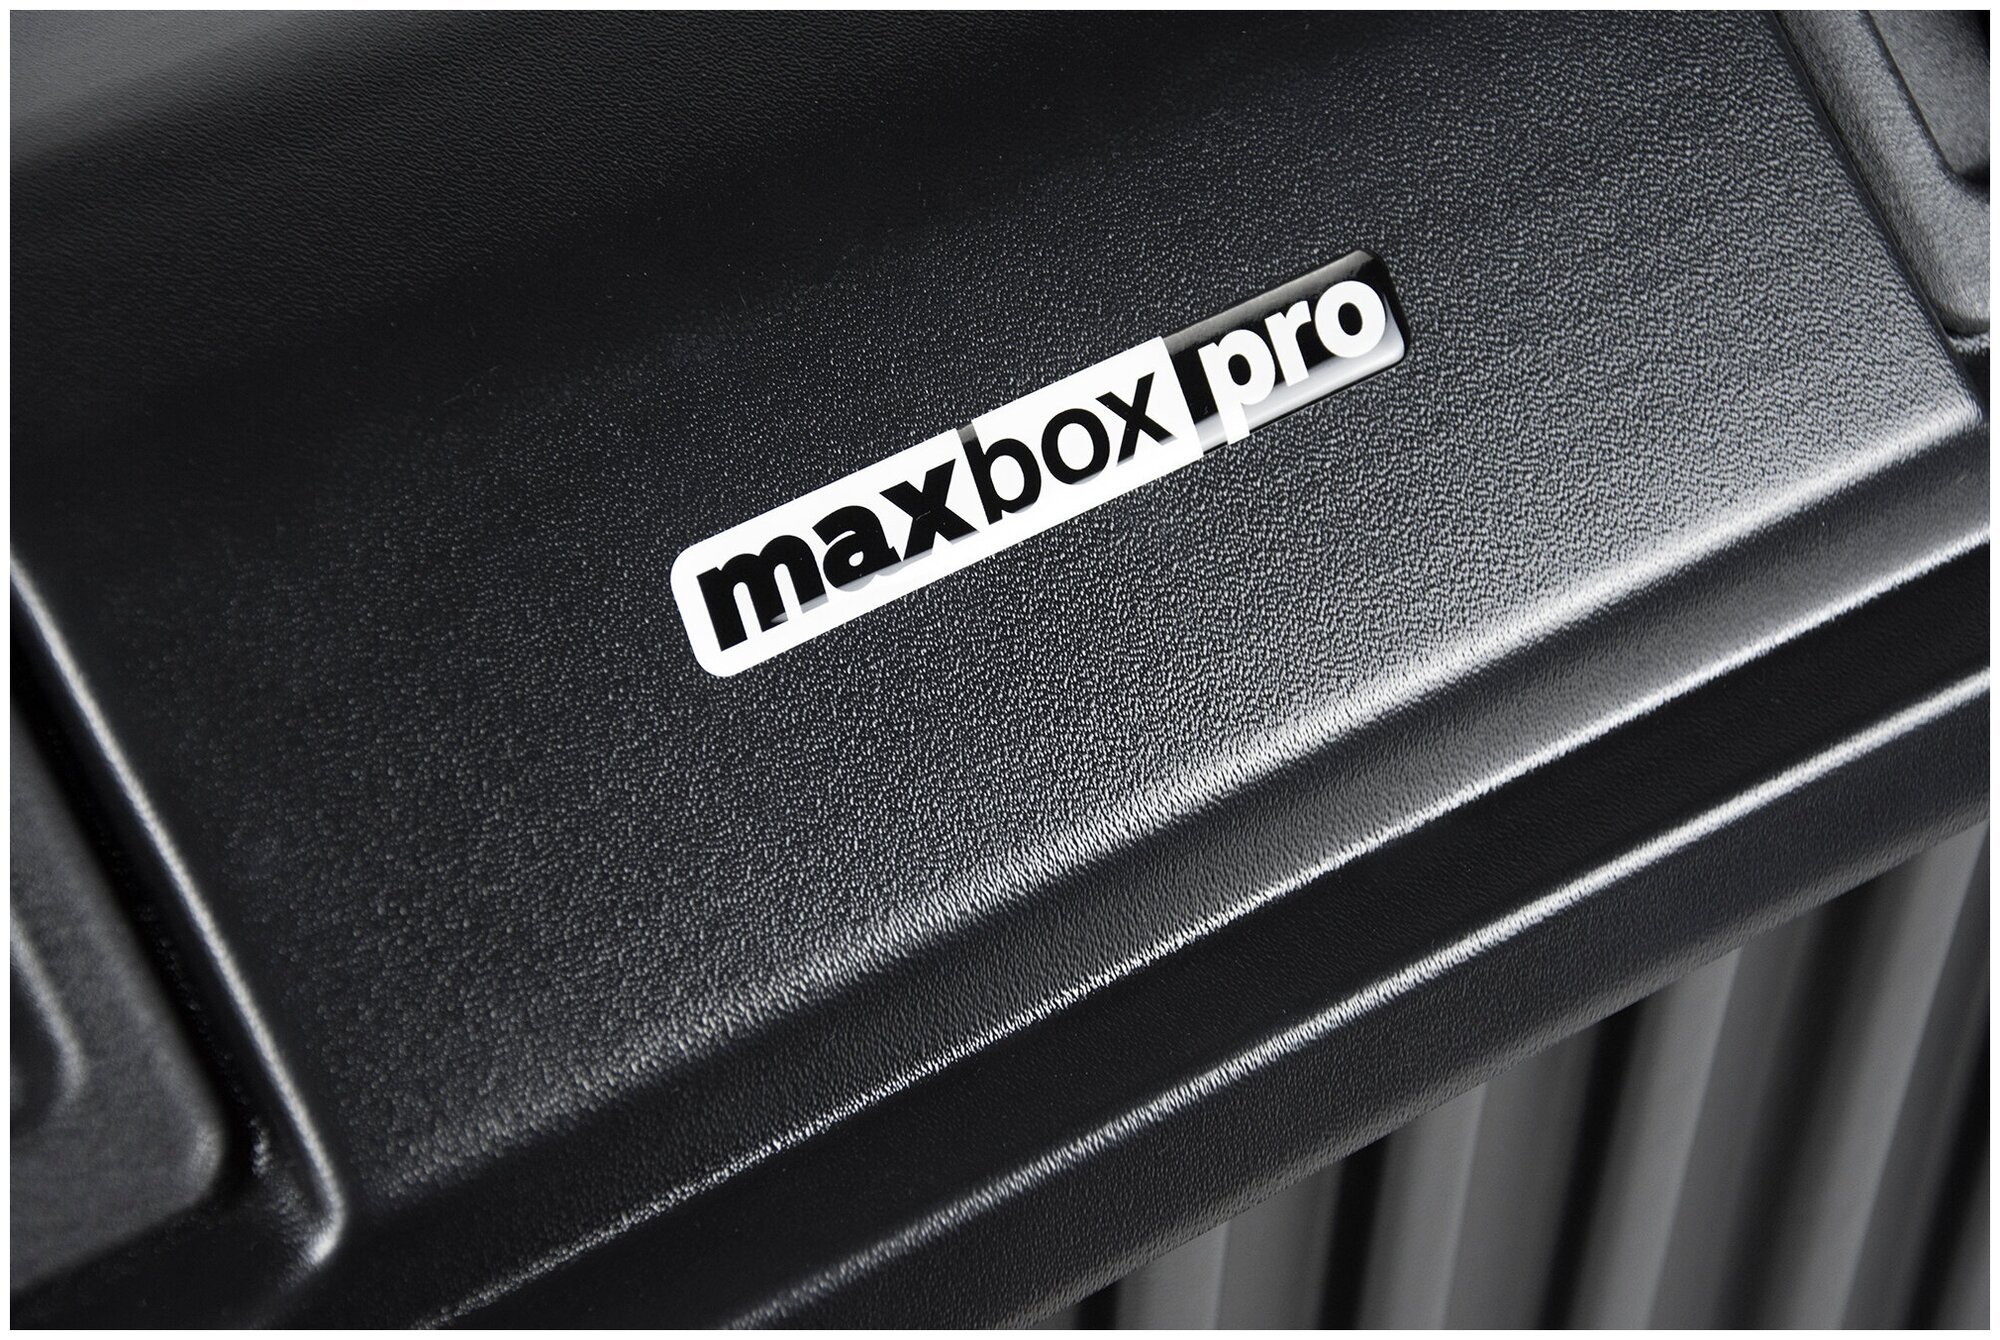 Ящик для прицепа MaxBox PRO 750x350x490 (81 л) на дышло легкового прицепа - фотография № 2